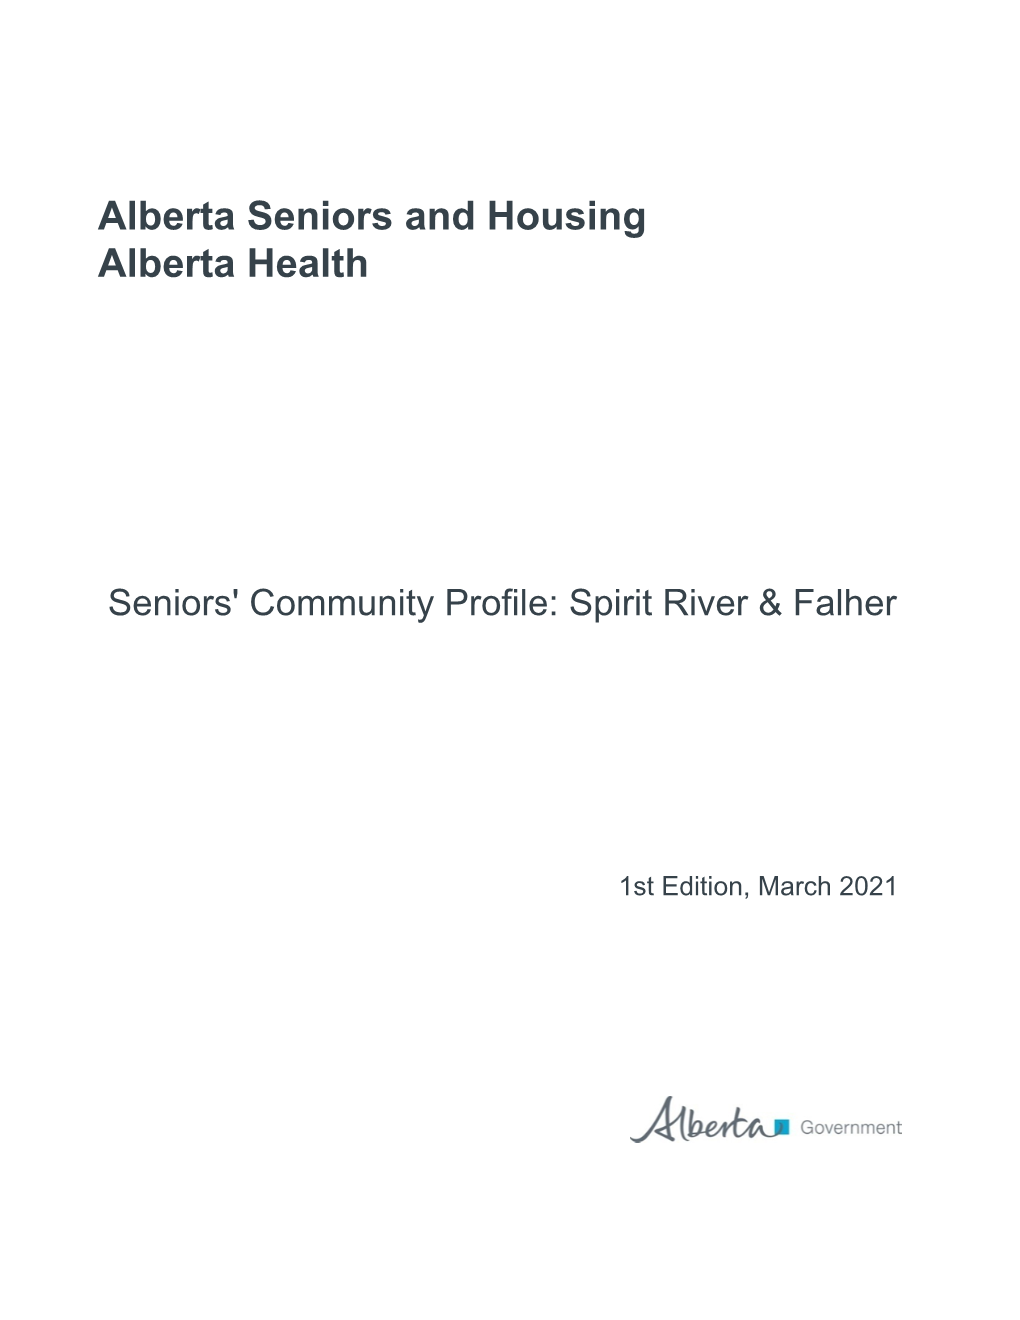 Seniors' Community Profile: Spirit River & Falher